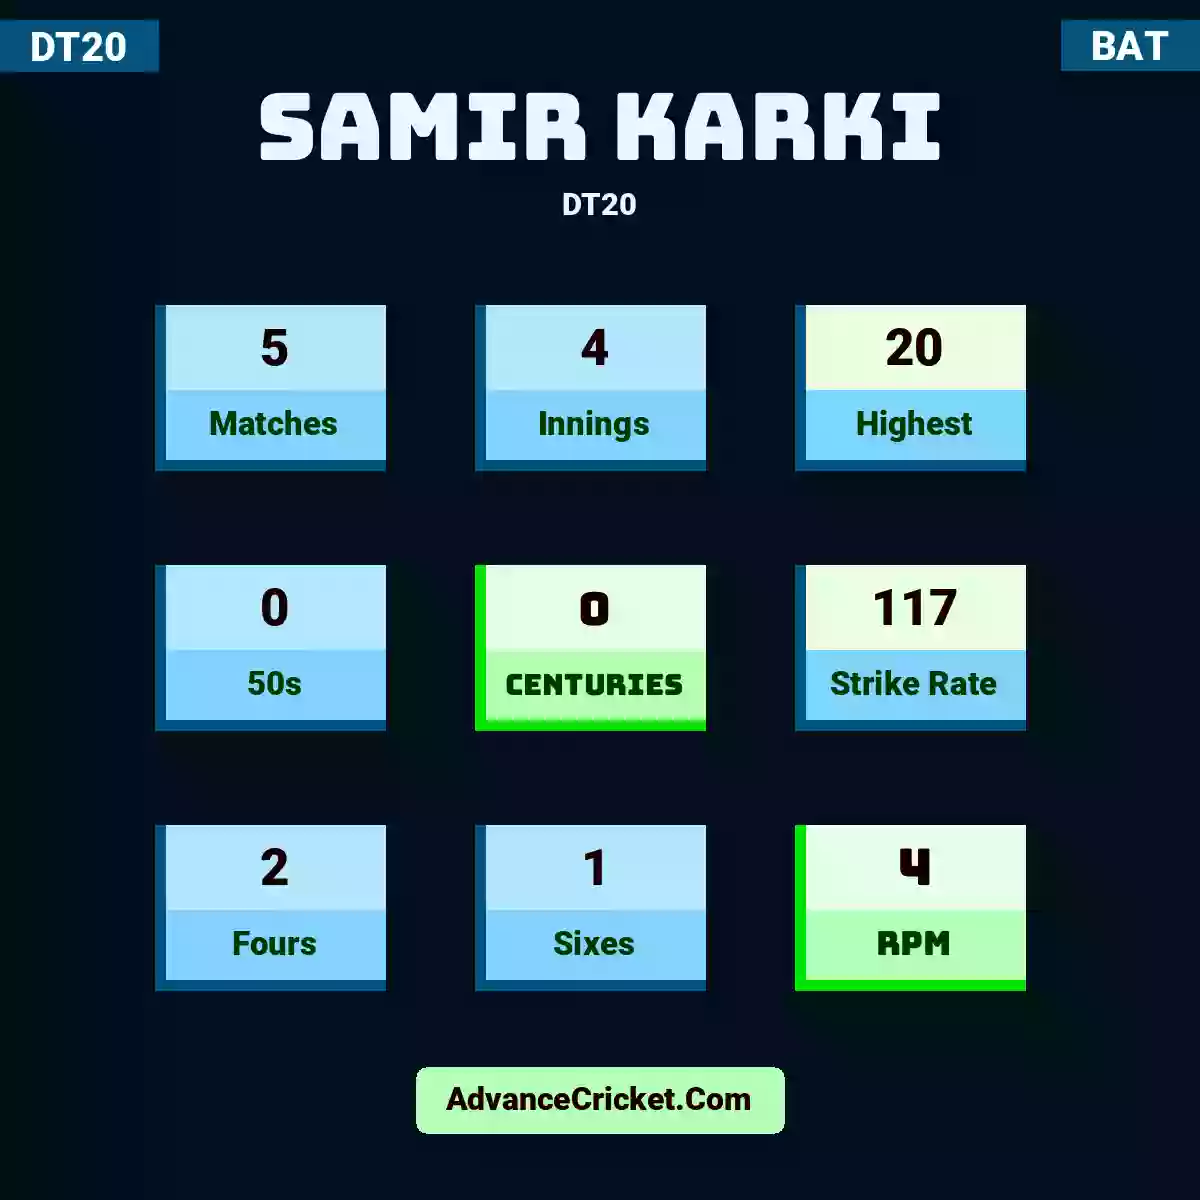 Samir Karki DT20 , Samir Karki played 5 matches, scored 20 runs as highest, 0 half-centuries, and 0 centuries, with a strike rate of 117. S.Karki hit 2 fours and 1 sixes, with an RPM of 4.